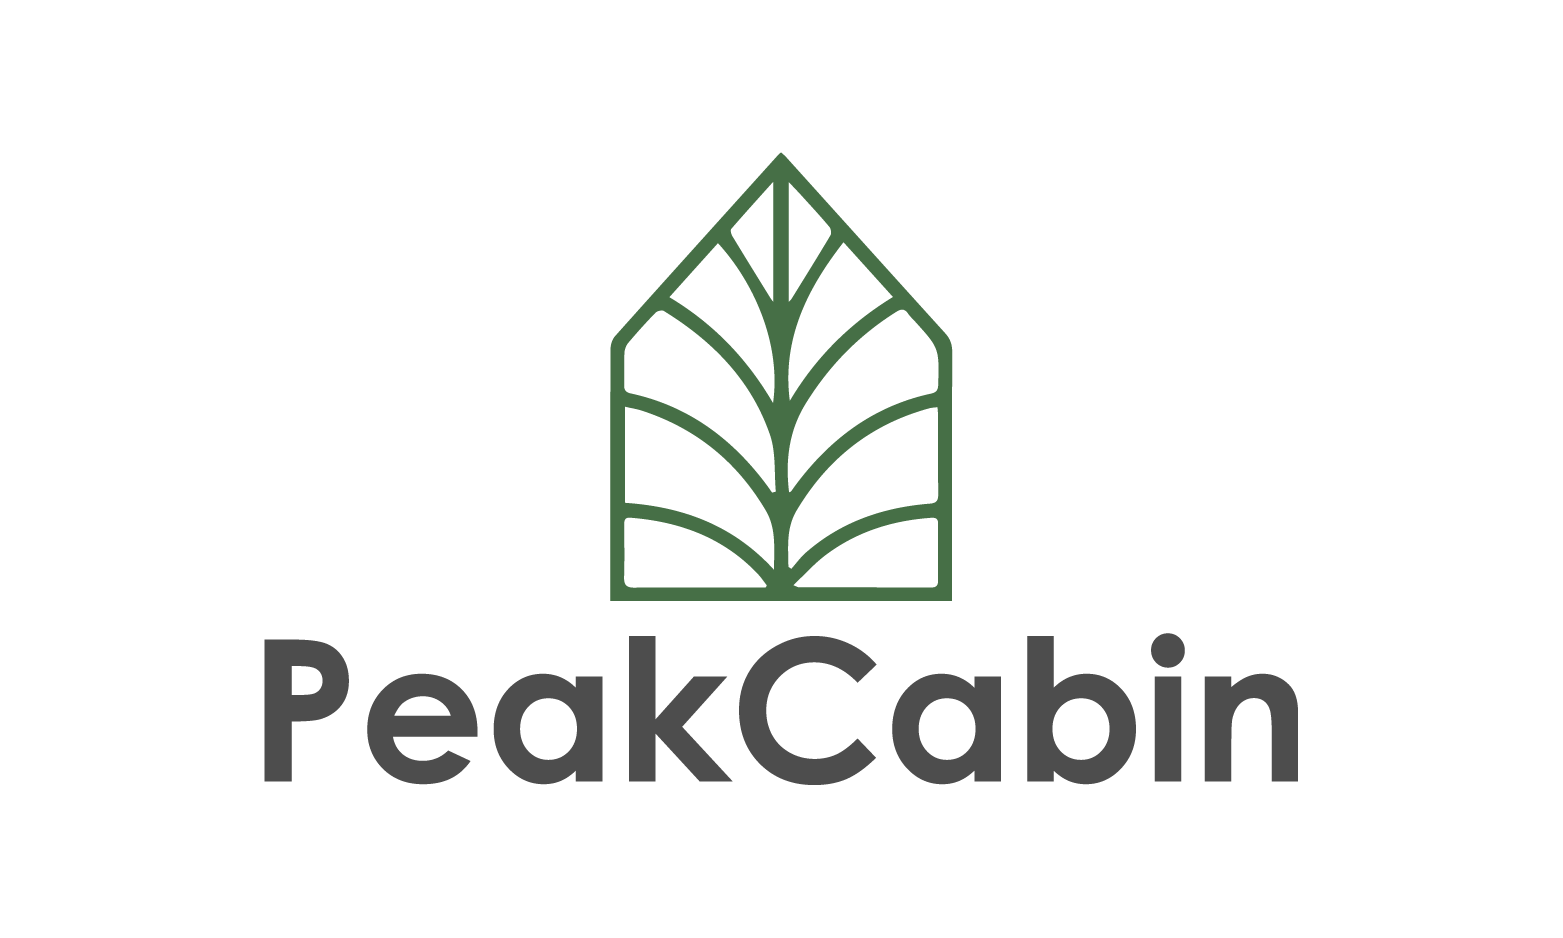 PeakCabin.com - Creative brandable domain for sale